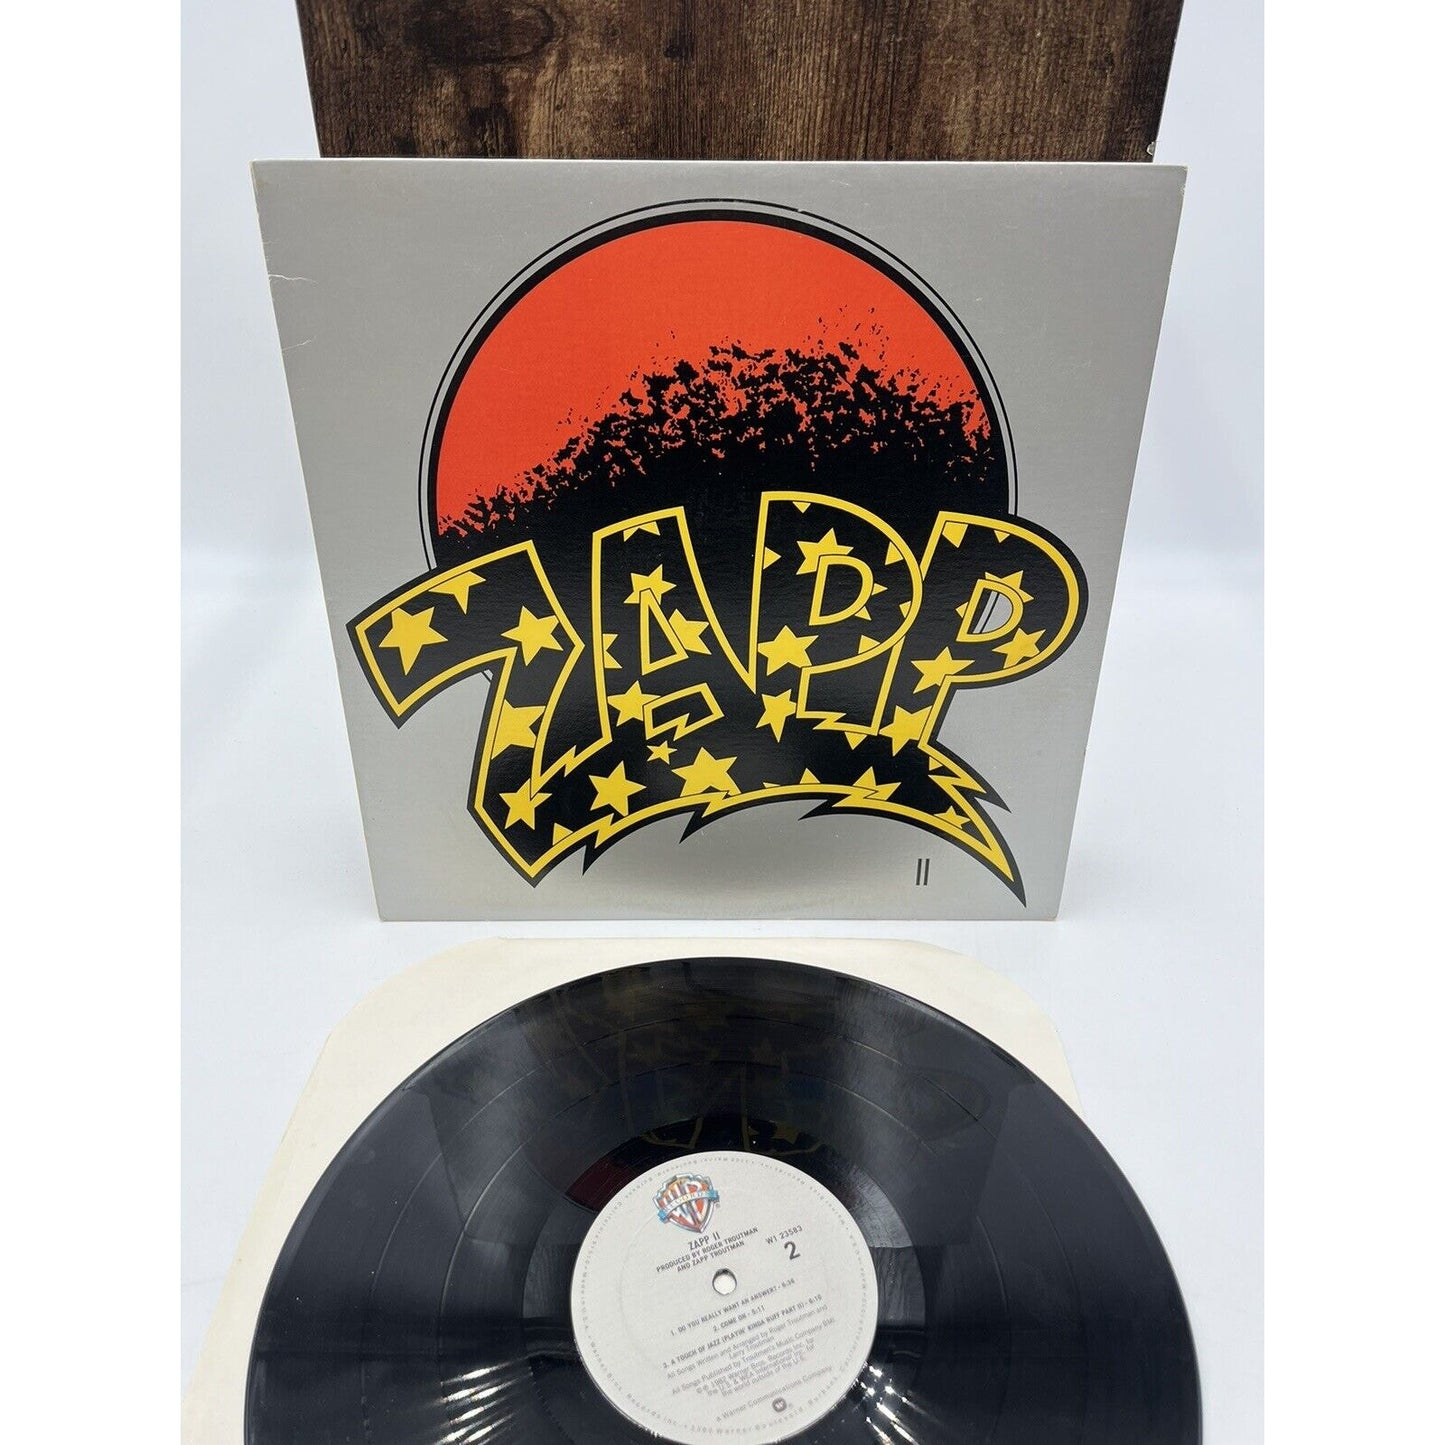 ZAPP II WARNER BROS LP VG+ Vinyl record Free Shipping